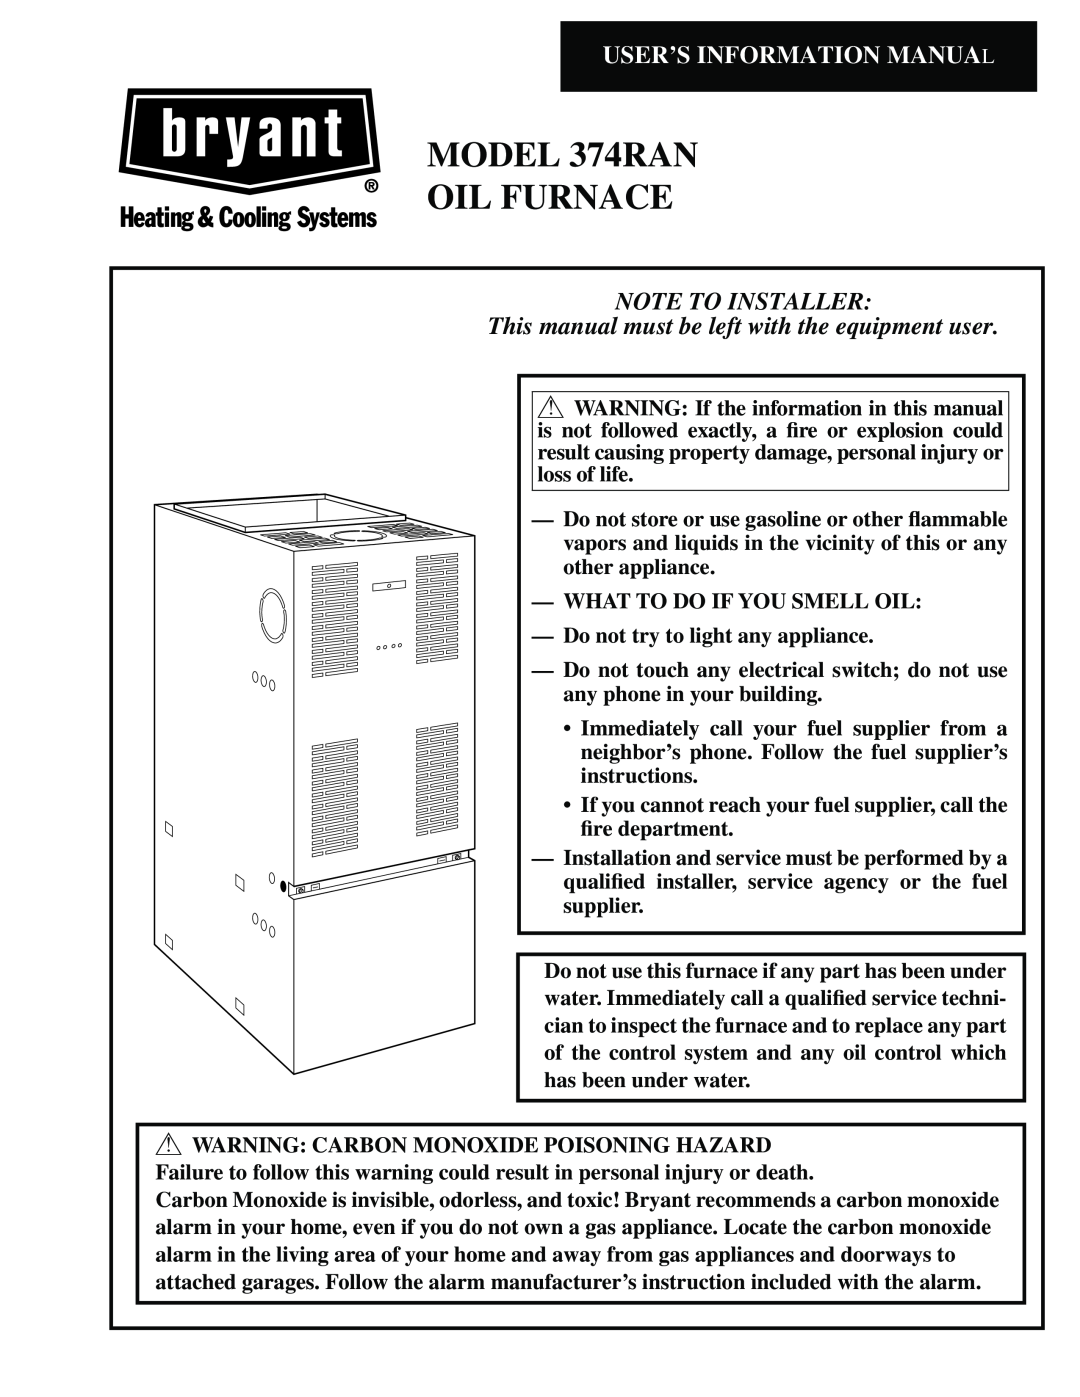 Bryant manual MODEL 374RAN OIL FURNACE, User’S Information Manual, Note To Installer 